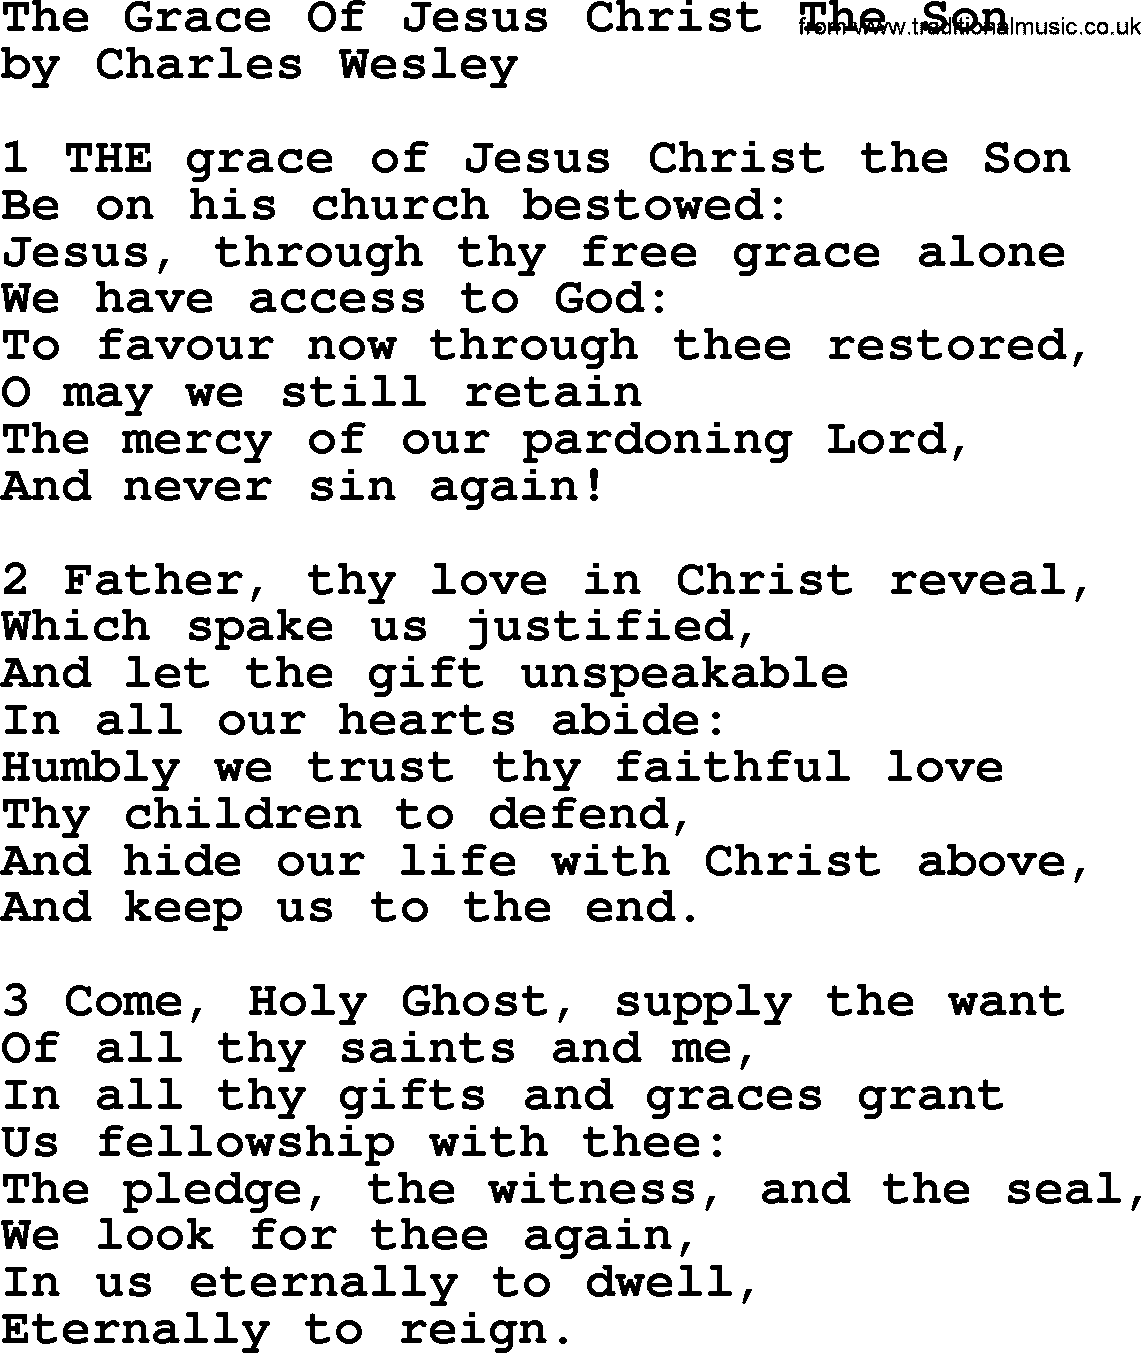 Charles Wesley hymn: The Grace Of Jesus Christ The Son, lyrics